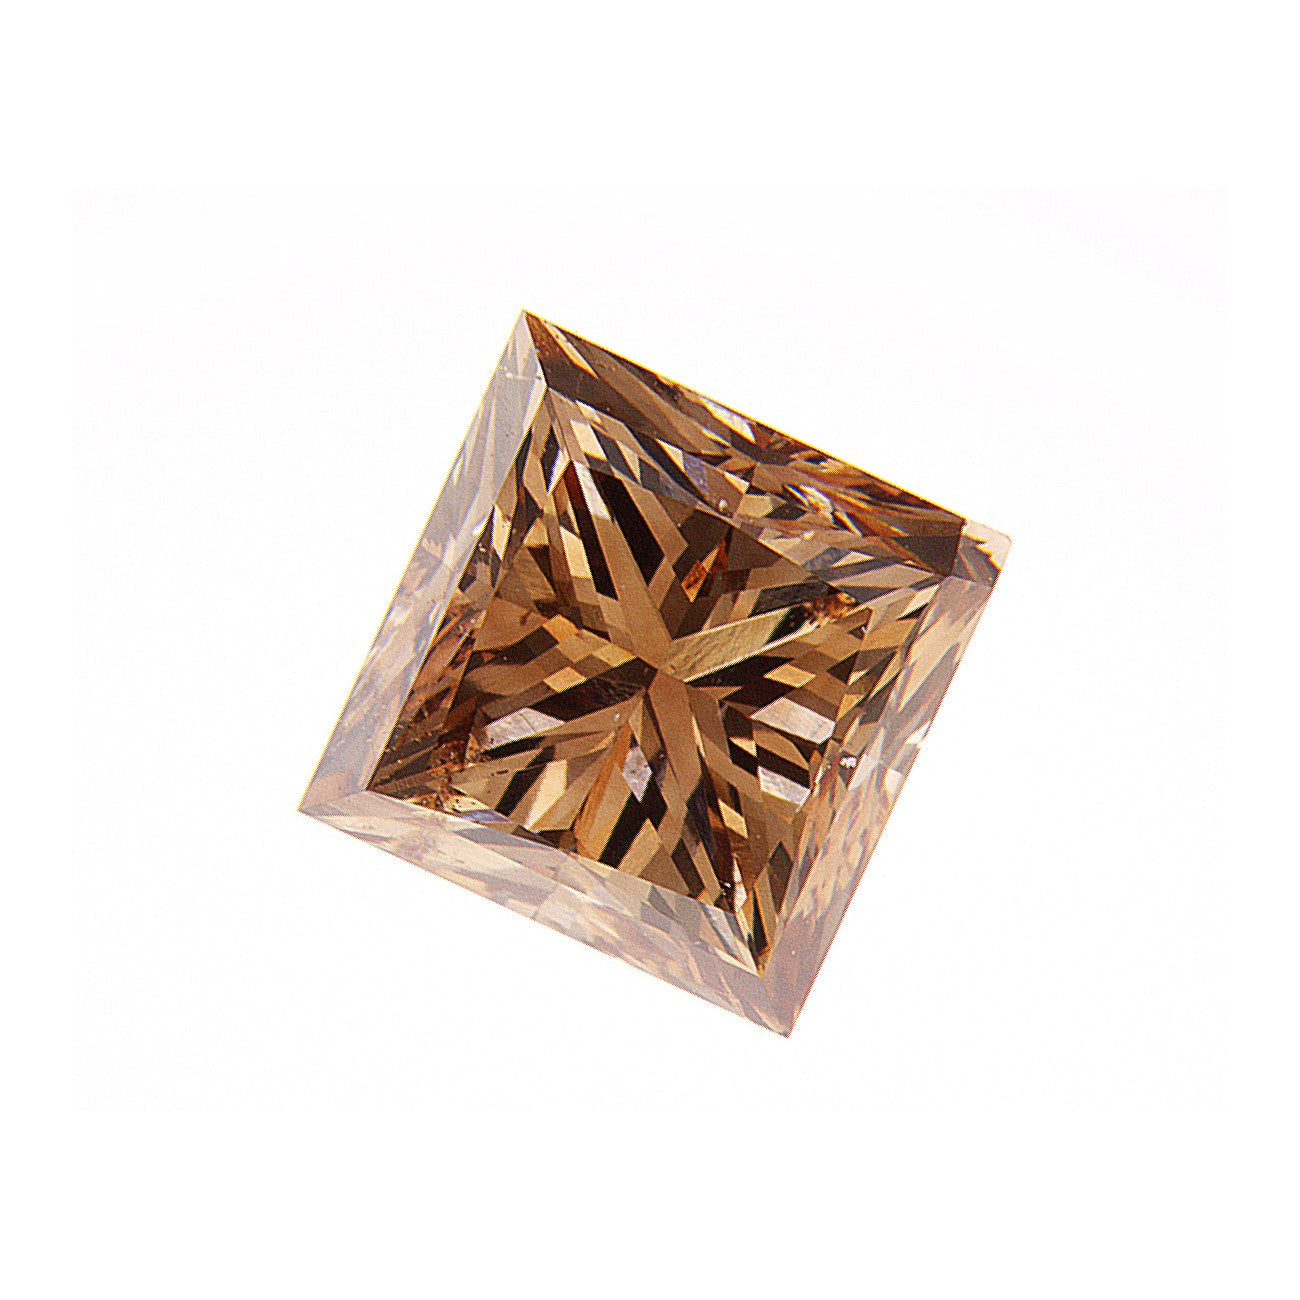 3.02ct Fancy Deep Brown, Princess Cut Diamond, SI1 - 7.38 x 7.24 x 6.31mm